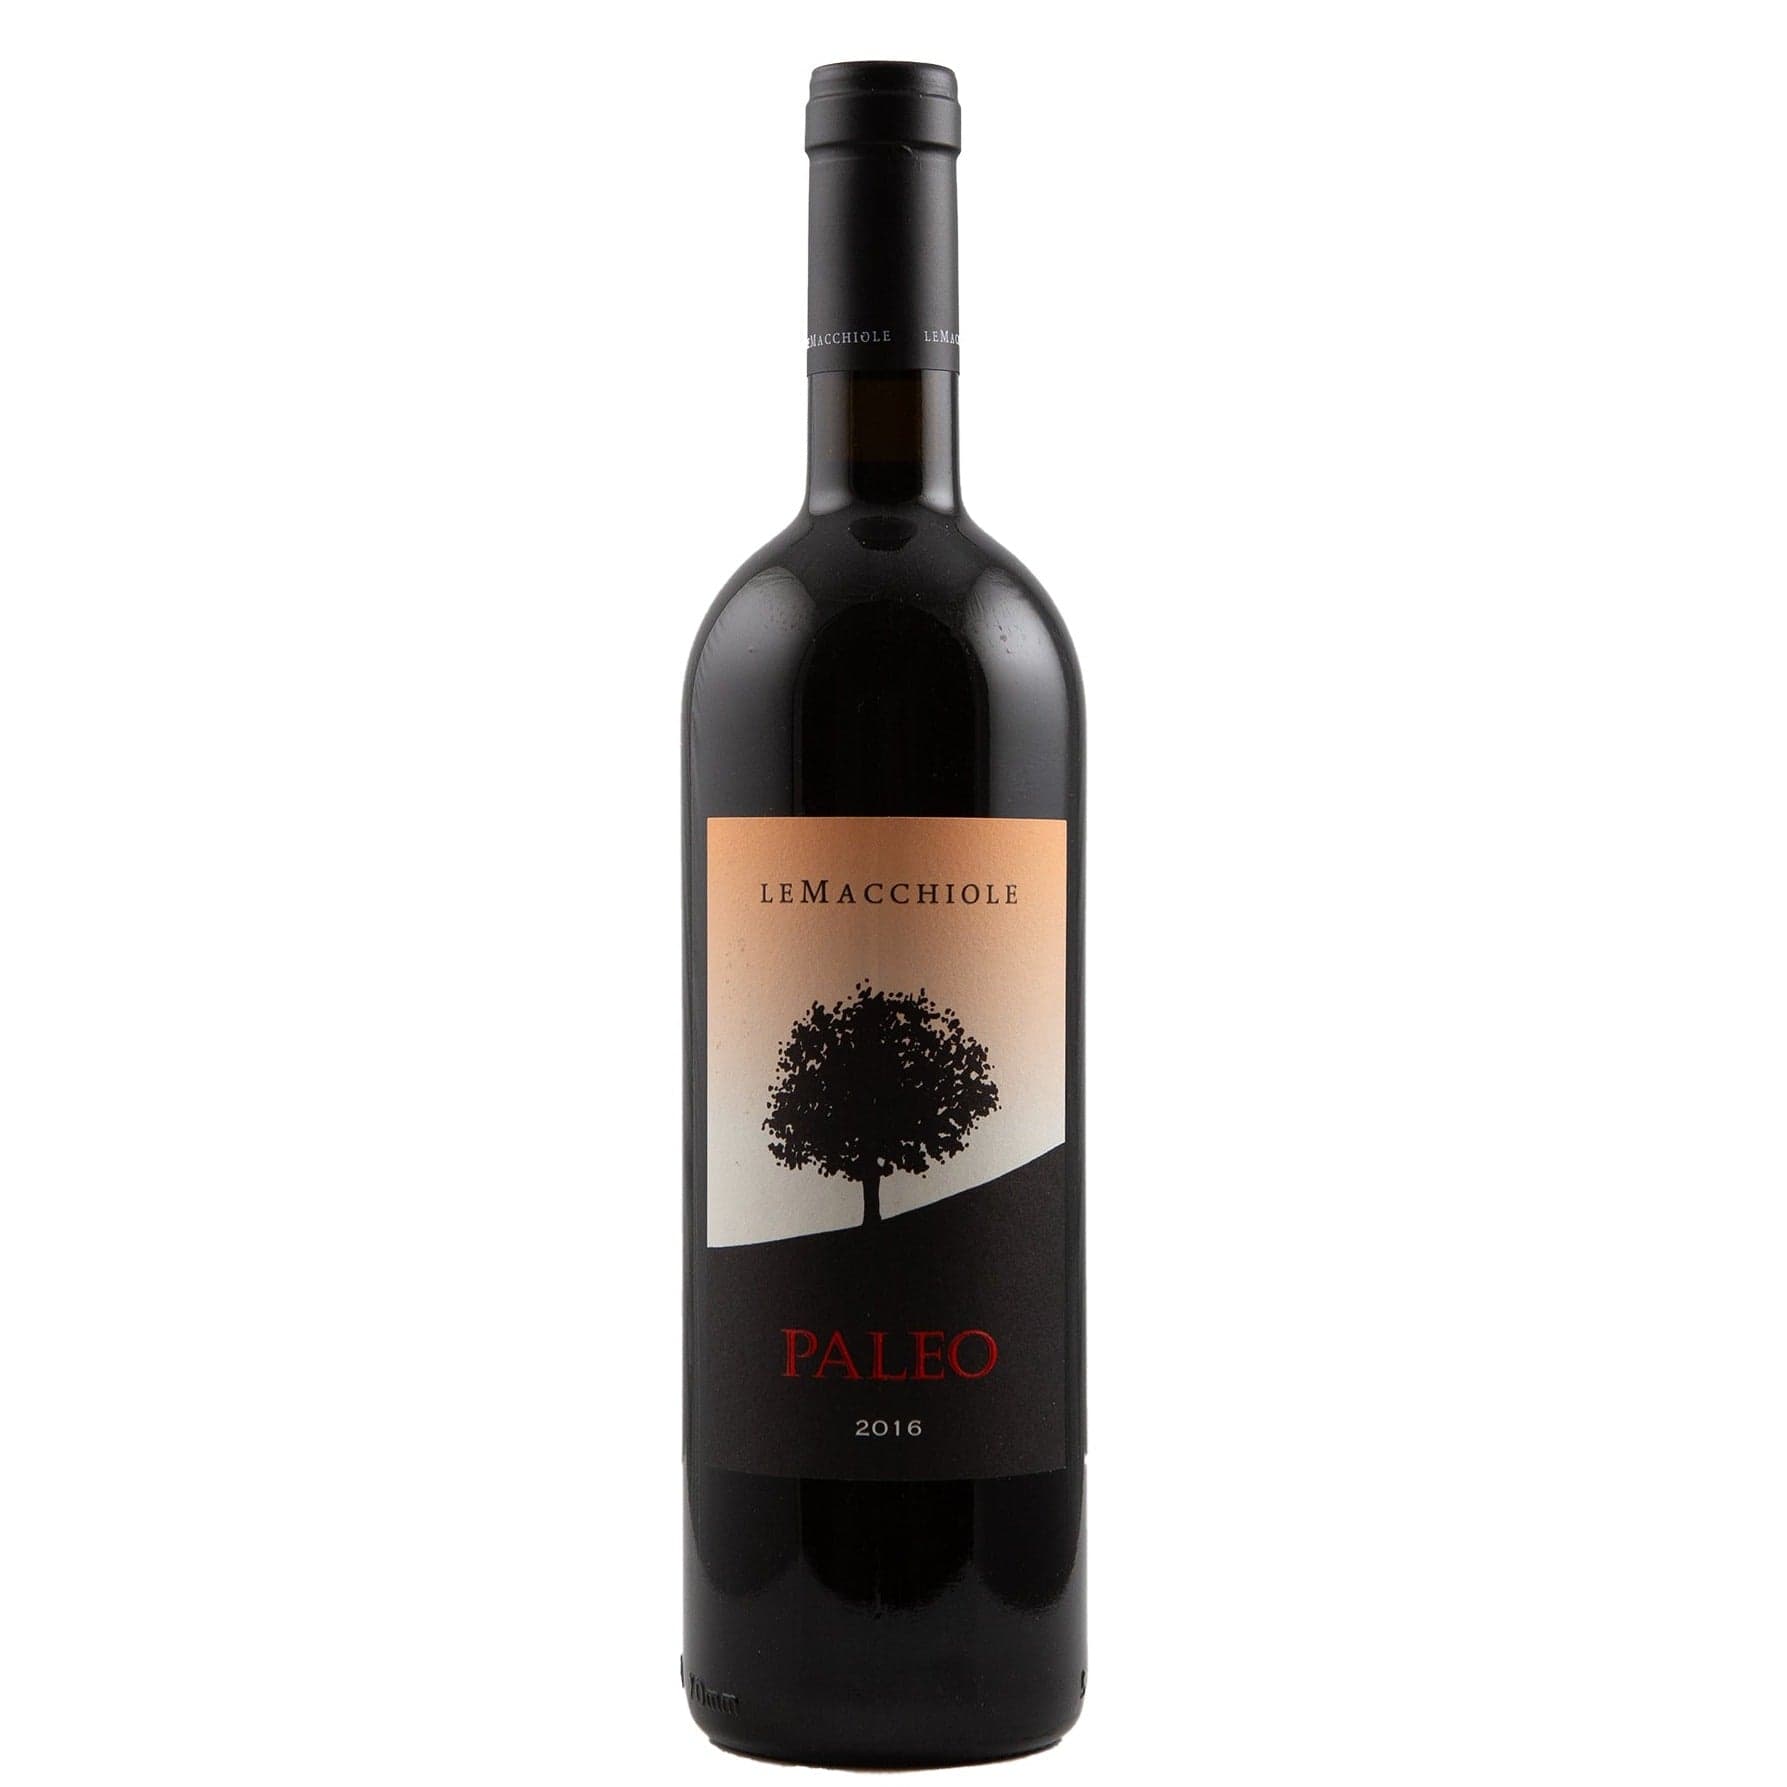 Single bottle of Red wine Le Macchiole, Paleo, Bolgheri, 2016 100% Cabernet Franc